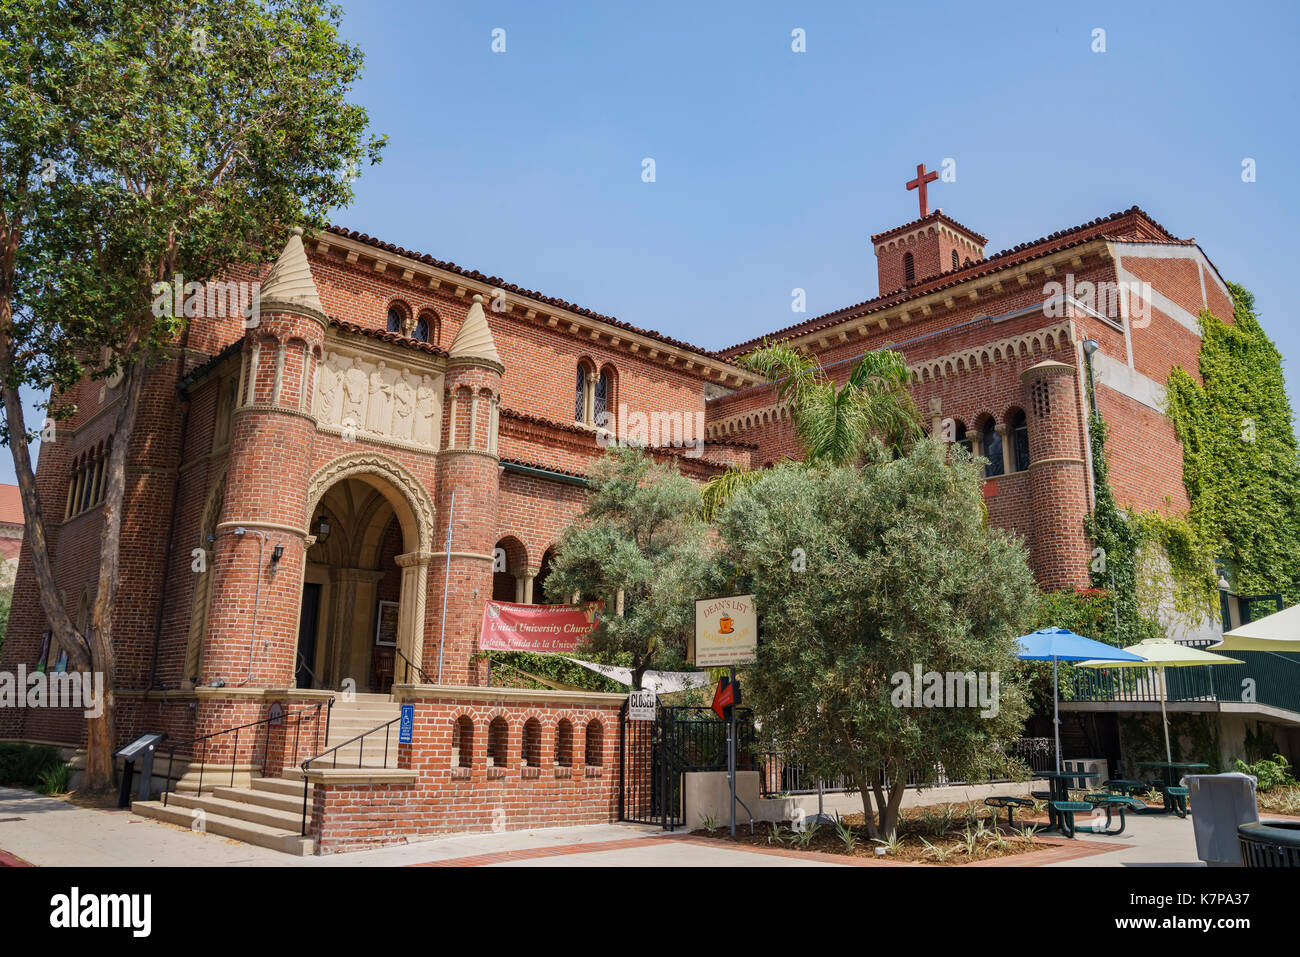 Los Angeles, JUN 4: United University Church of the University of Southern California on JUN 4, 2017 at Los Angeles Stock Photo